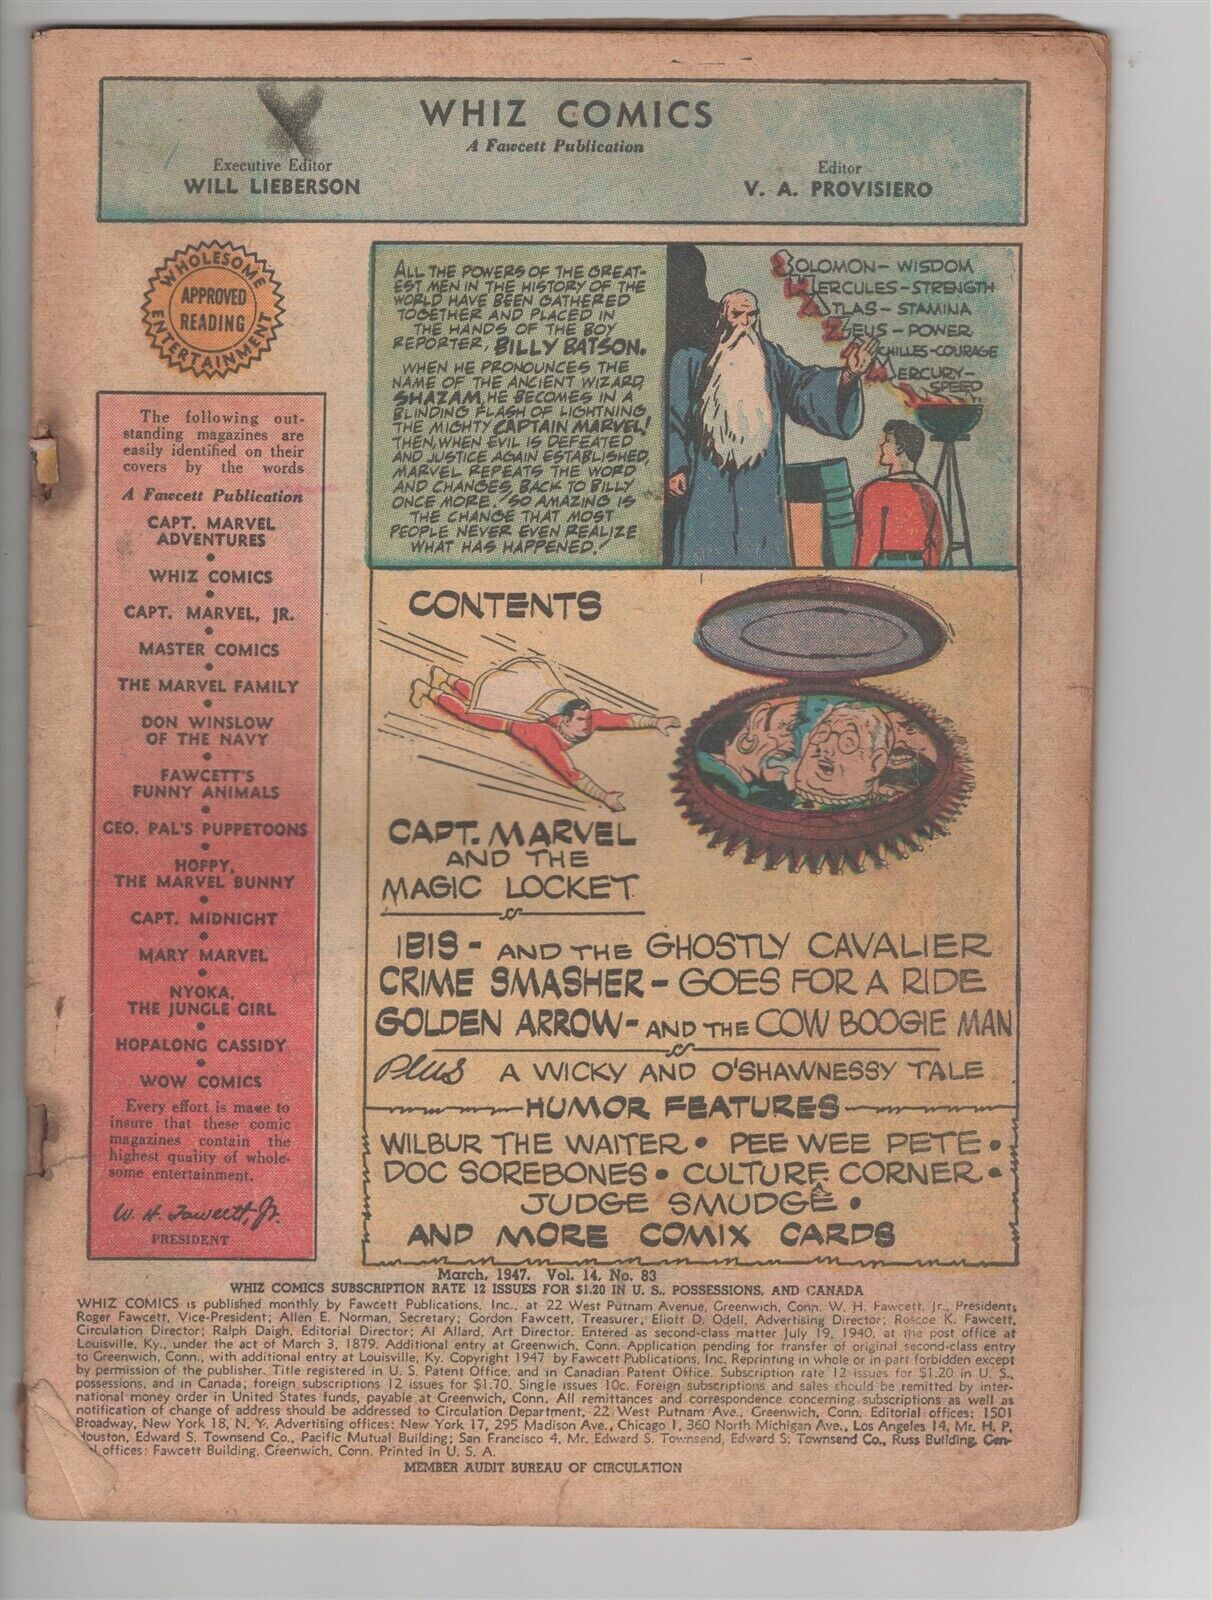 Whiz Comics # 83 (Vol. 14 #83) Coverless Captain Marvel Store Marking 1947